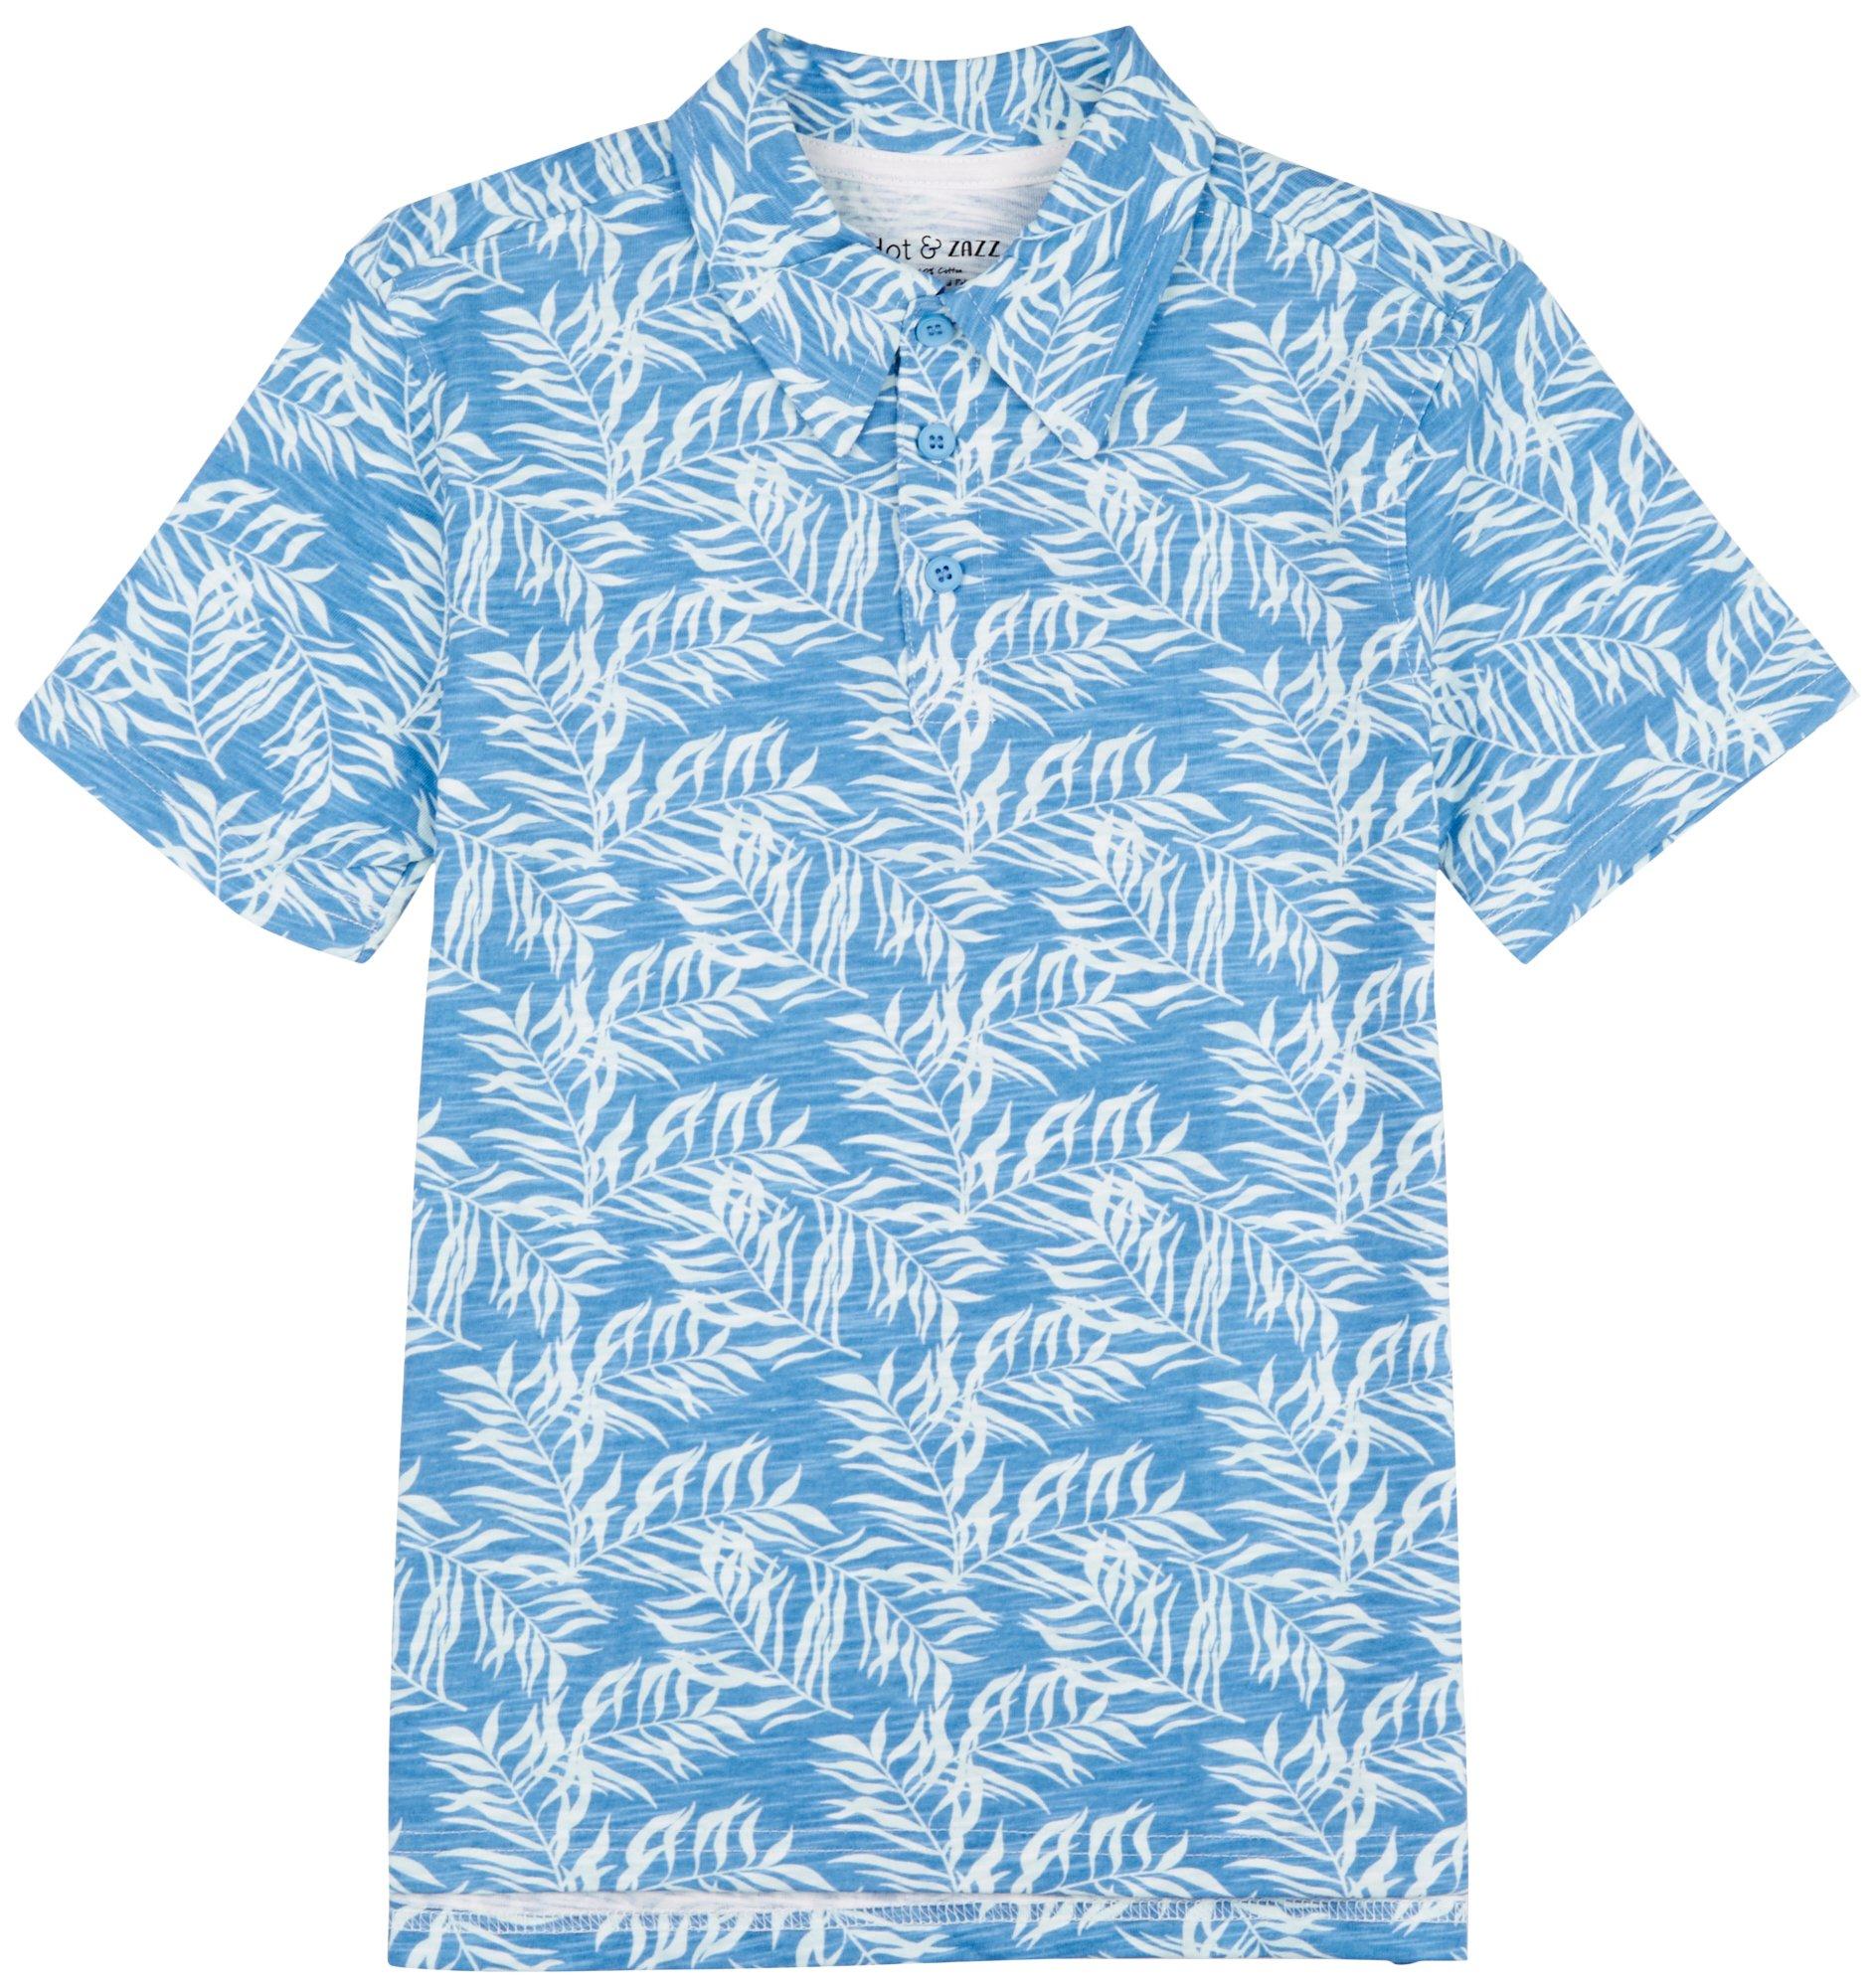 DOT & ZAZZ Big Boys Slub Leaf Print Polo Shirt